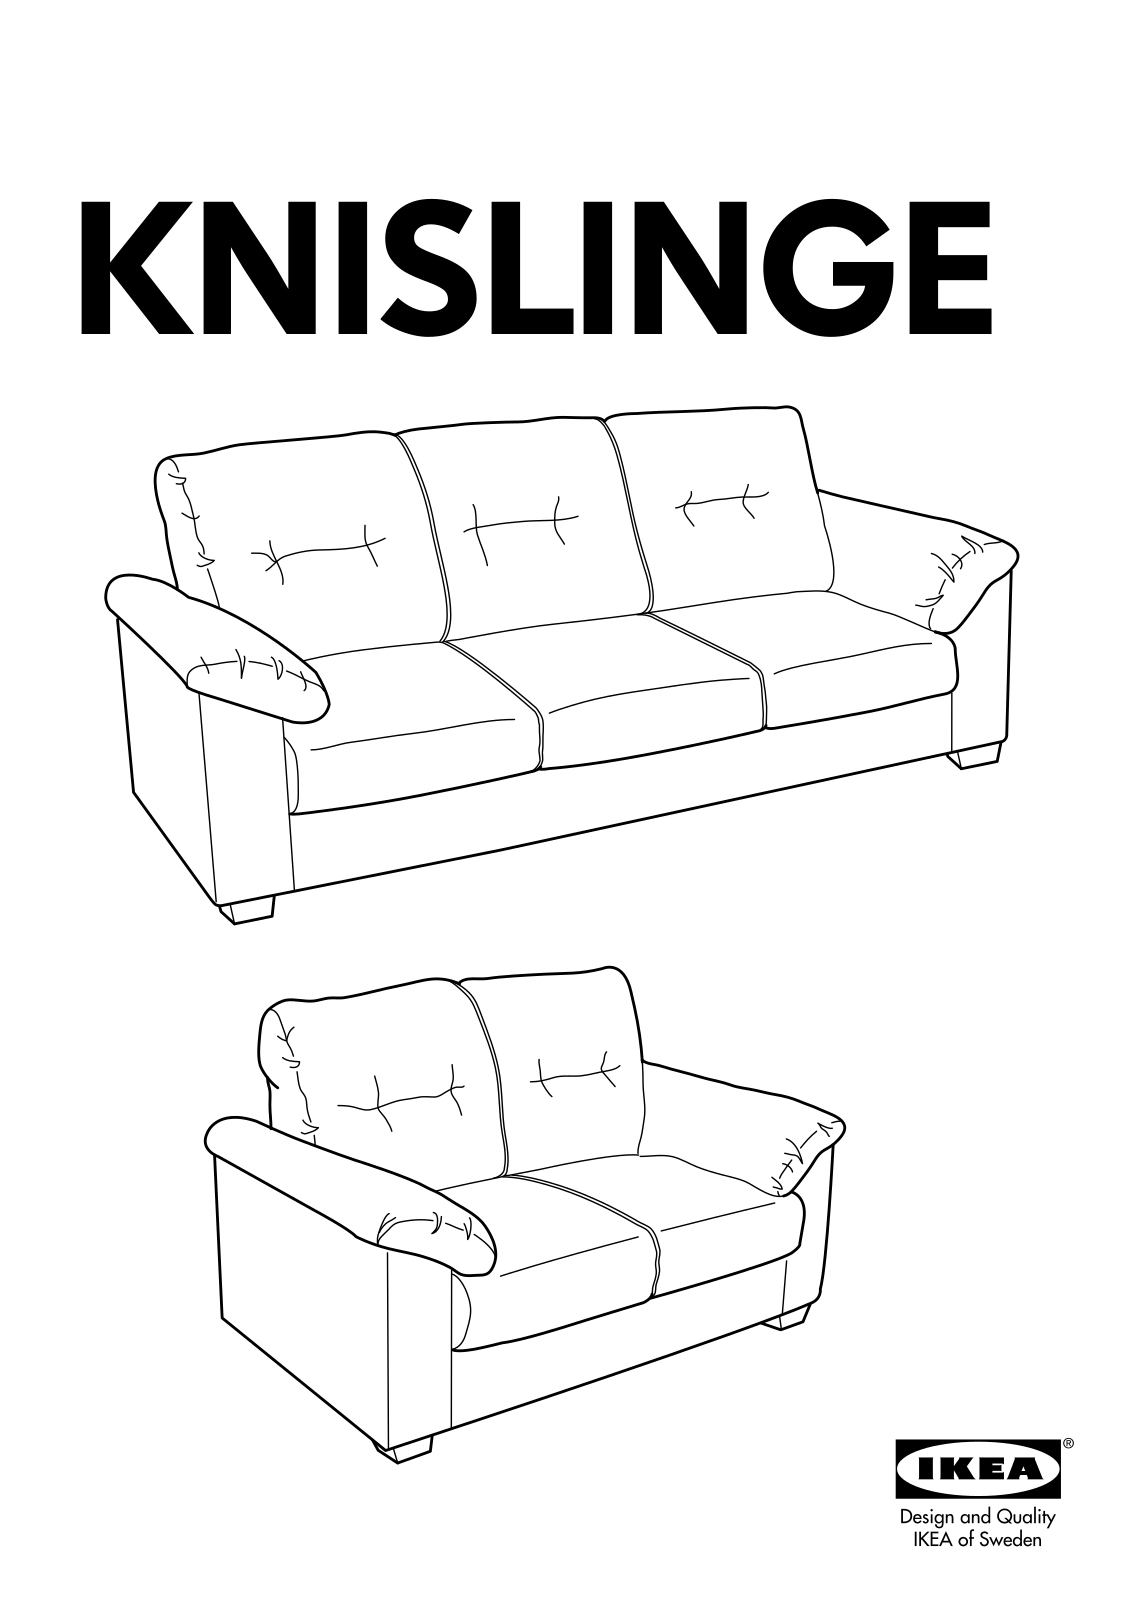 IKEA KNISLINGE User Manual